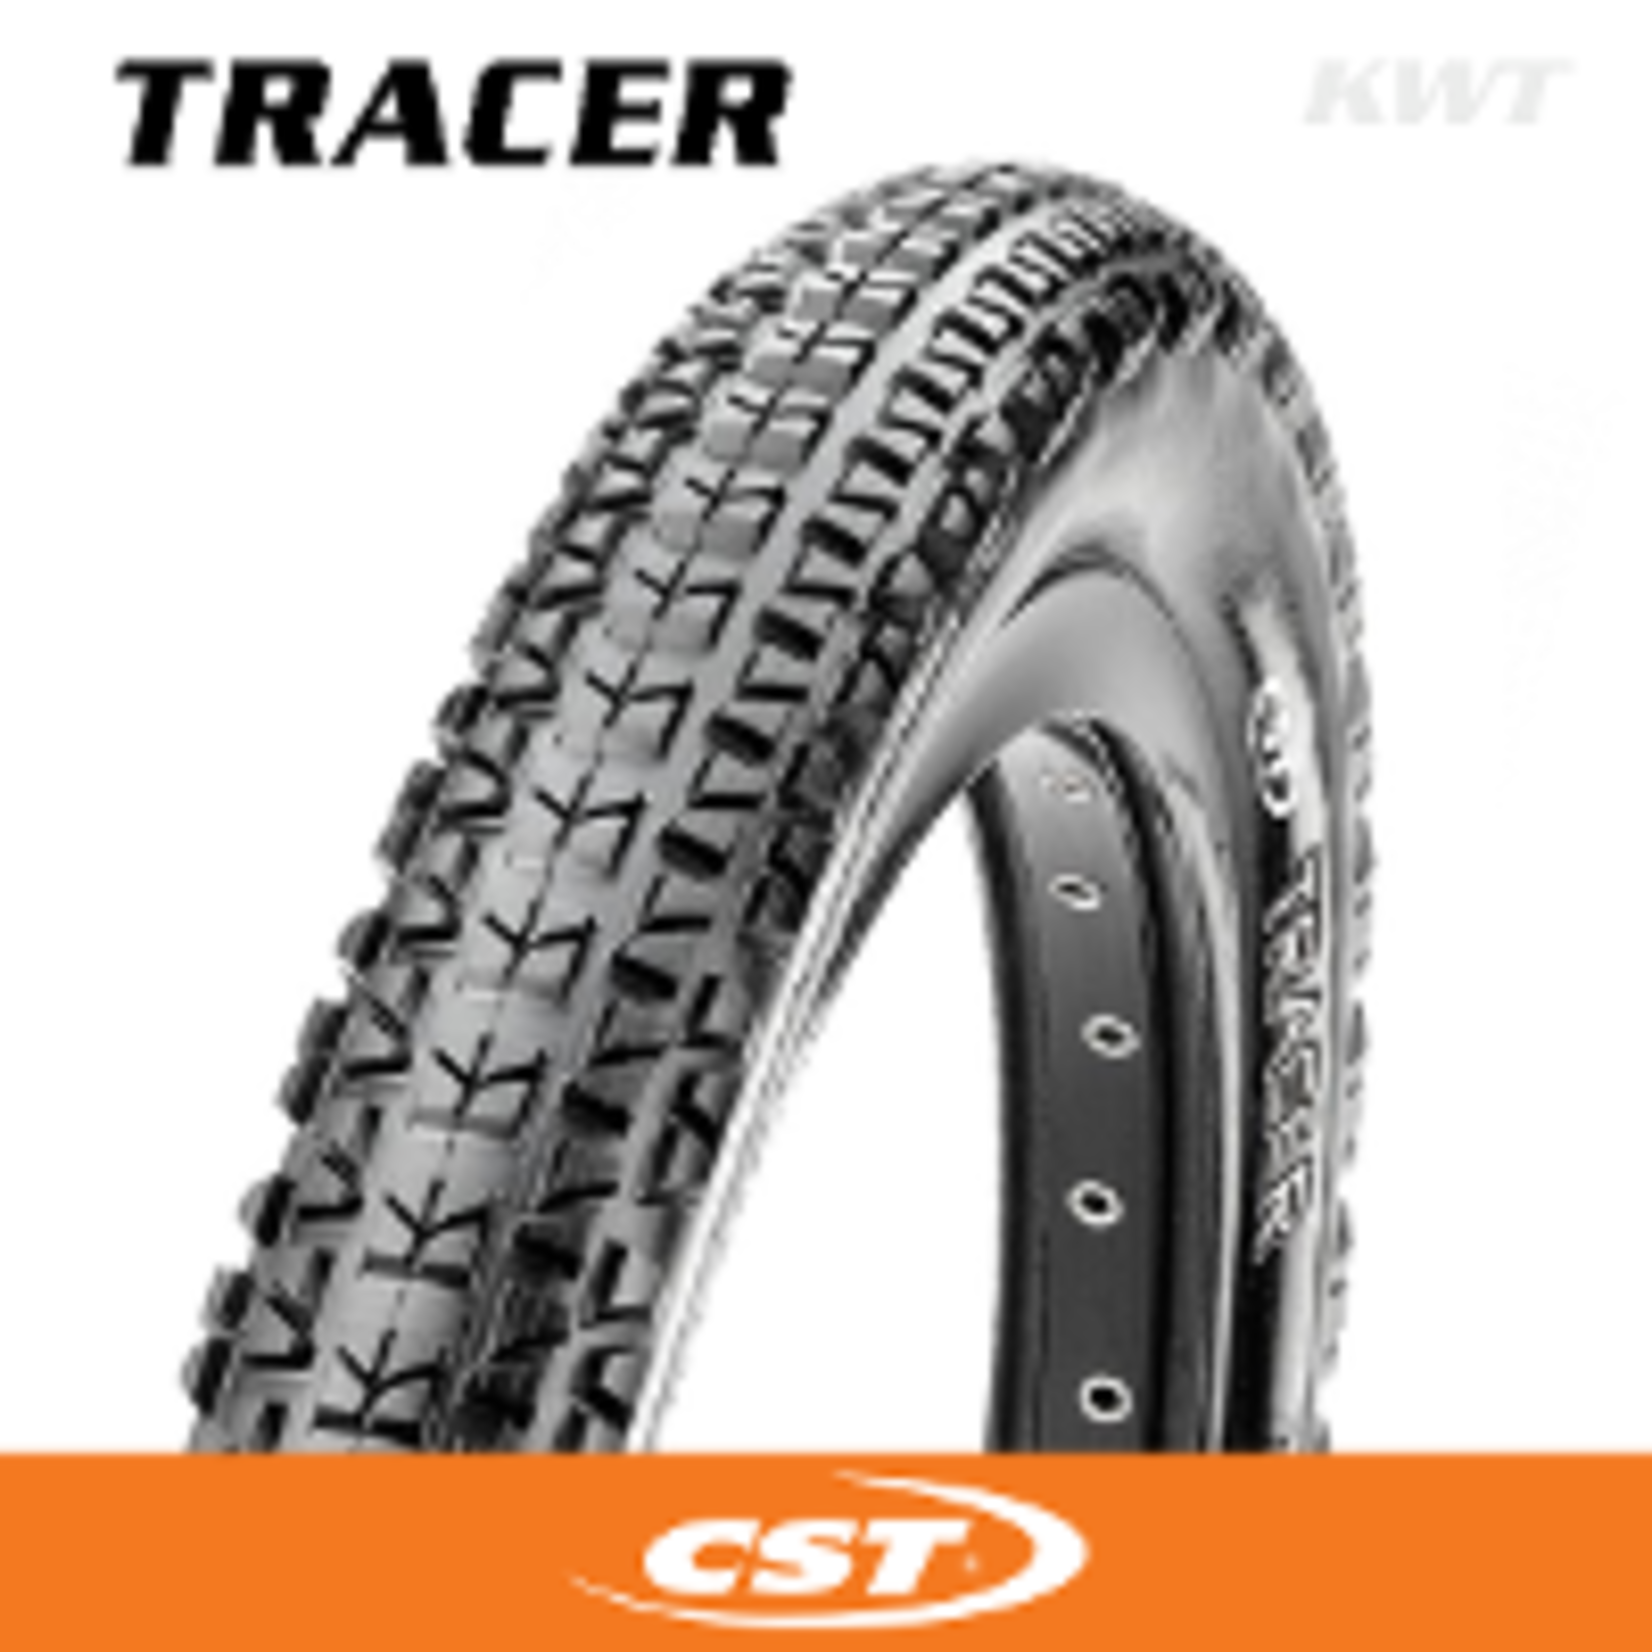 CST CST Bike Tyre - Tracer - 20 X 2.1 - Wirebead - C1751 - Black - Pair